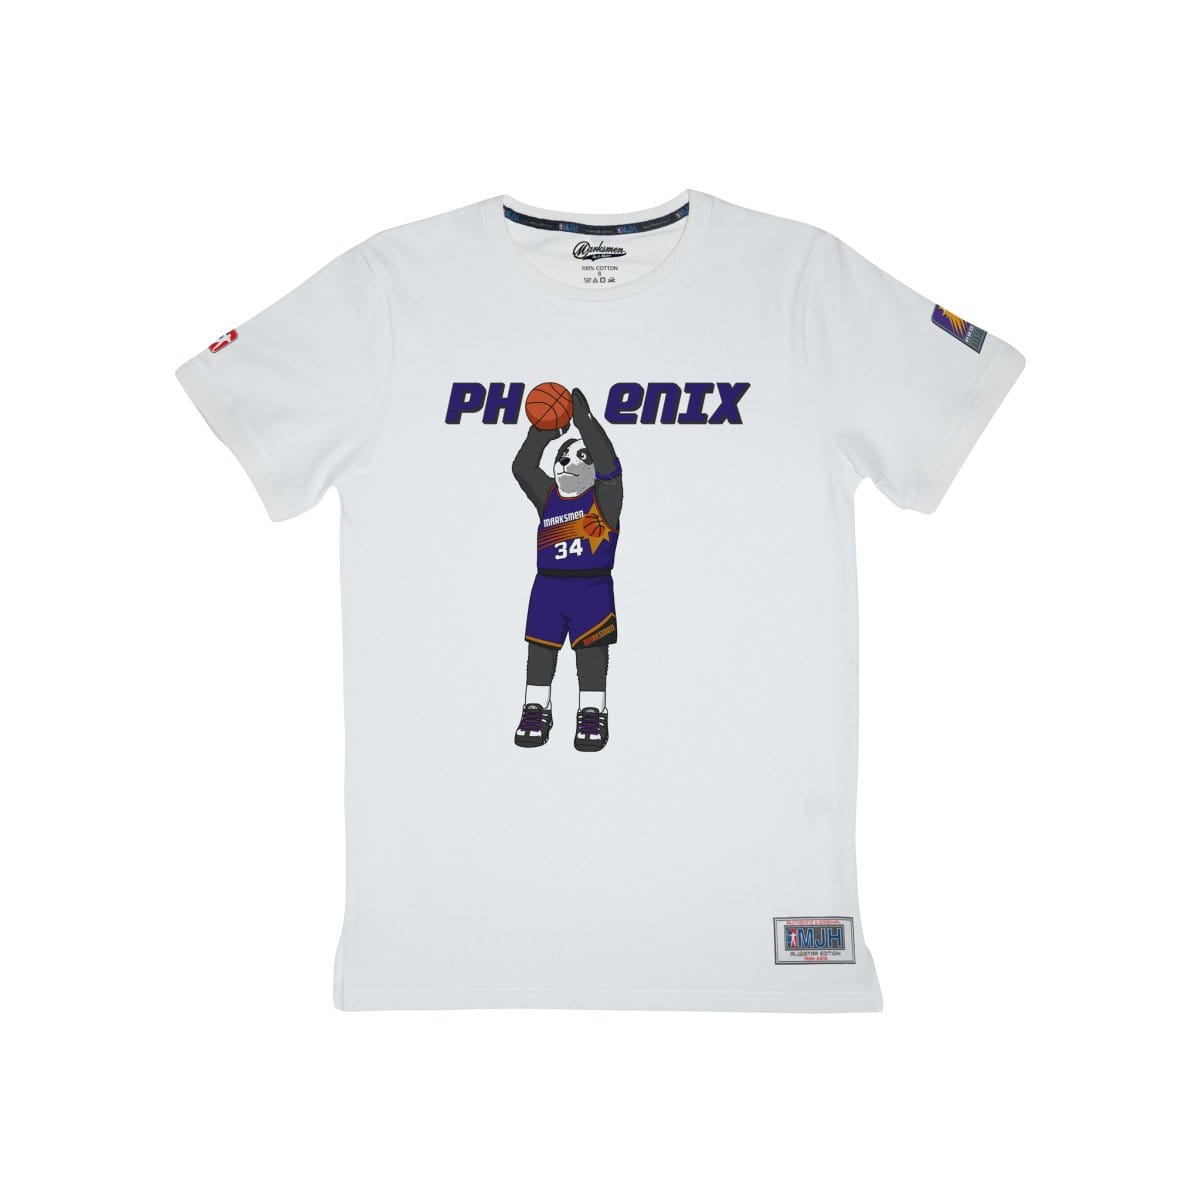 J.Hinton Collections Men’s Phoenix Barkley Inspired T-Shirt